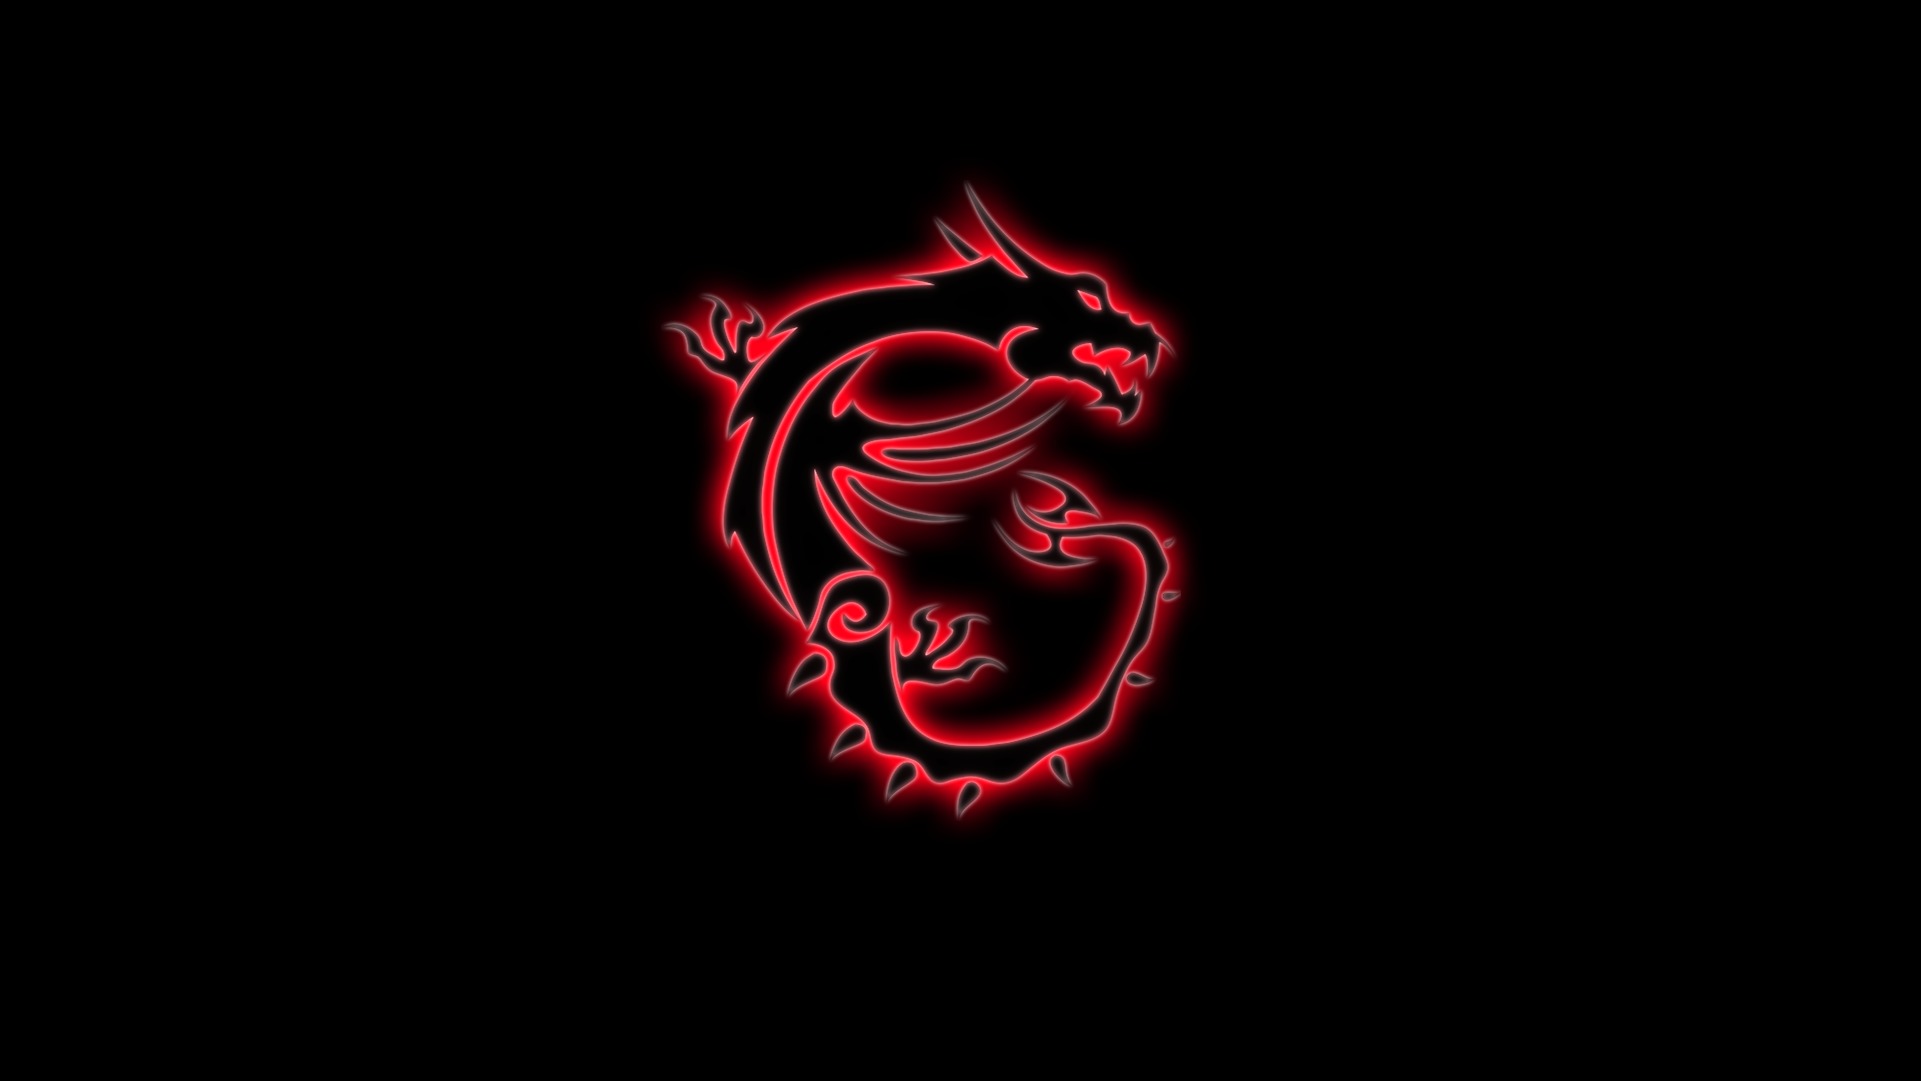 Msi micro star international gaming dragon red game red dragon